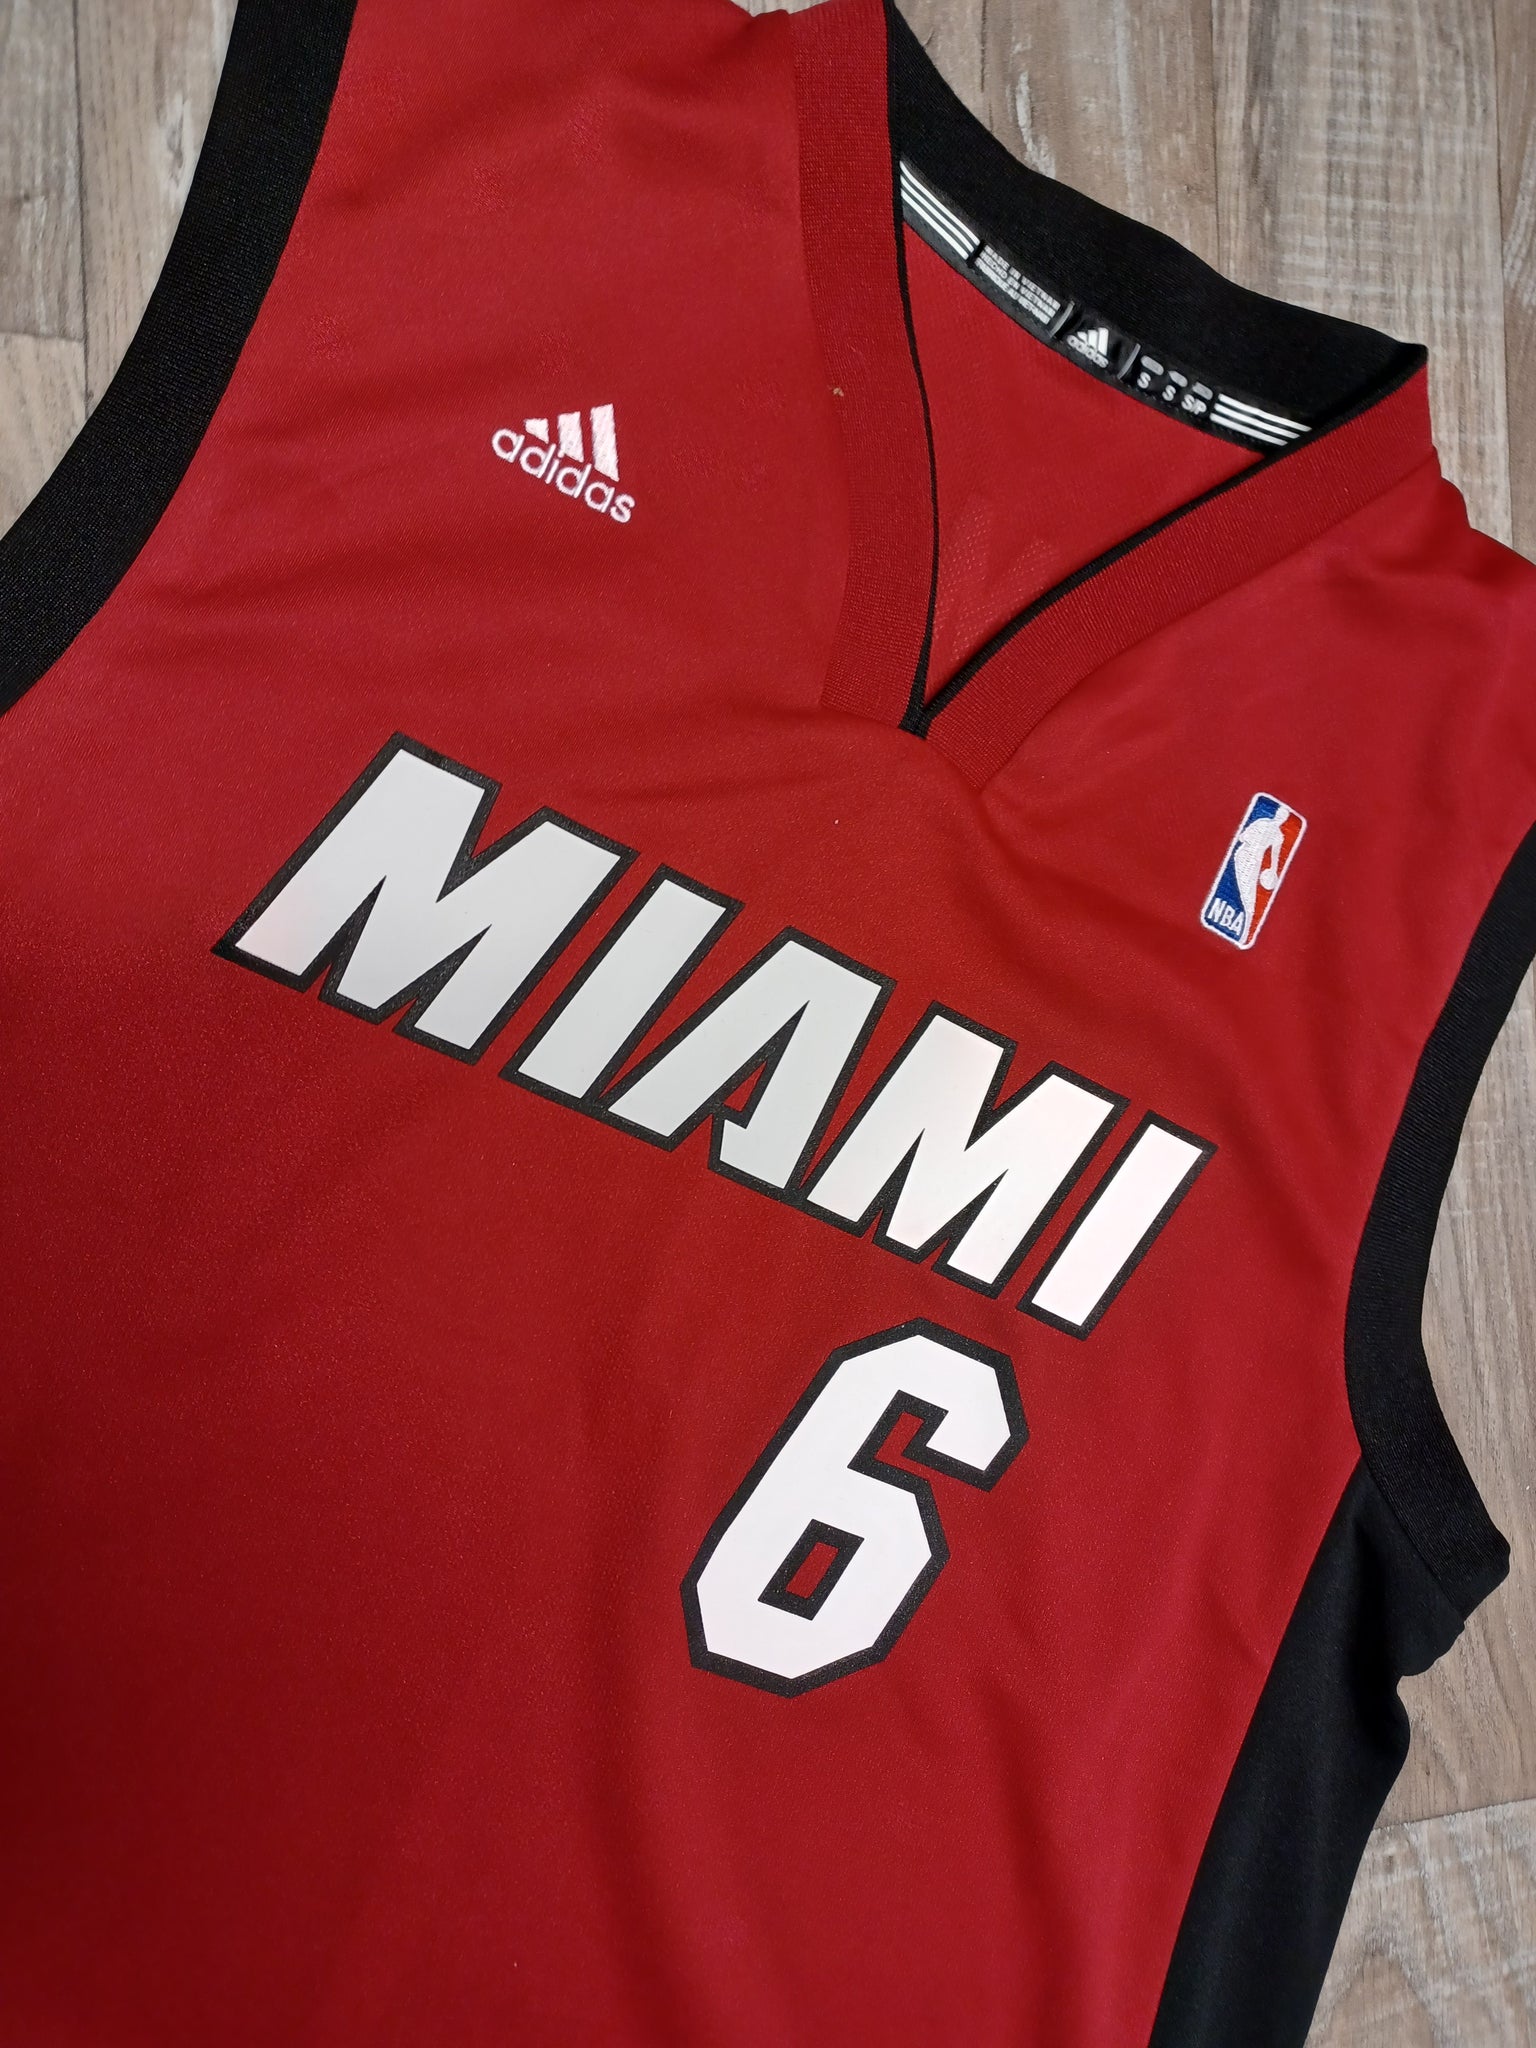 Lebron James Miami Heat NBA Basketball Jersey Adidas White Large